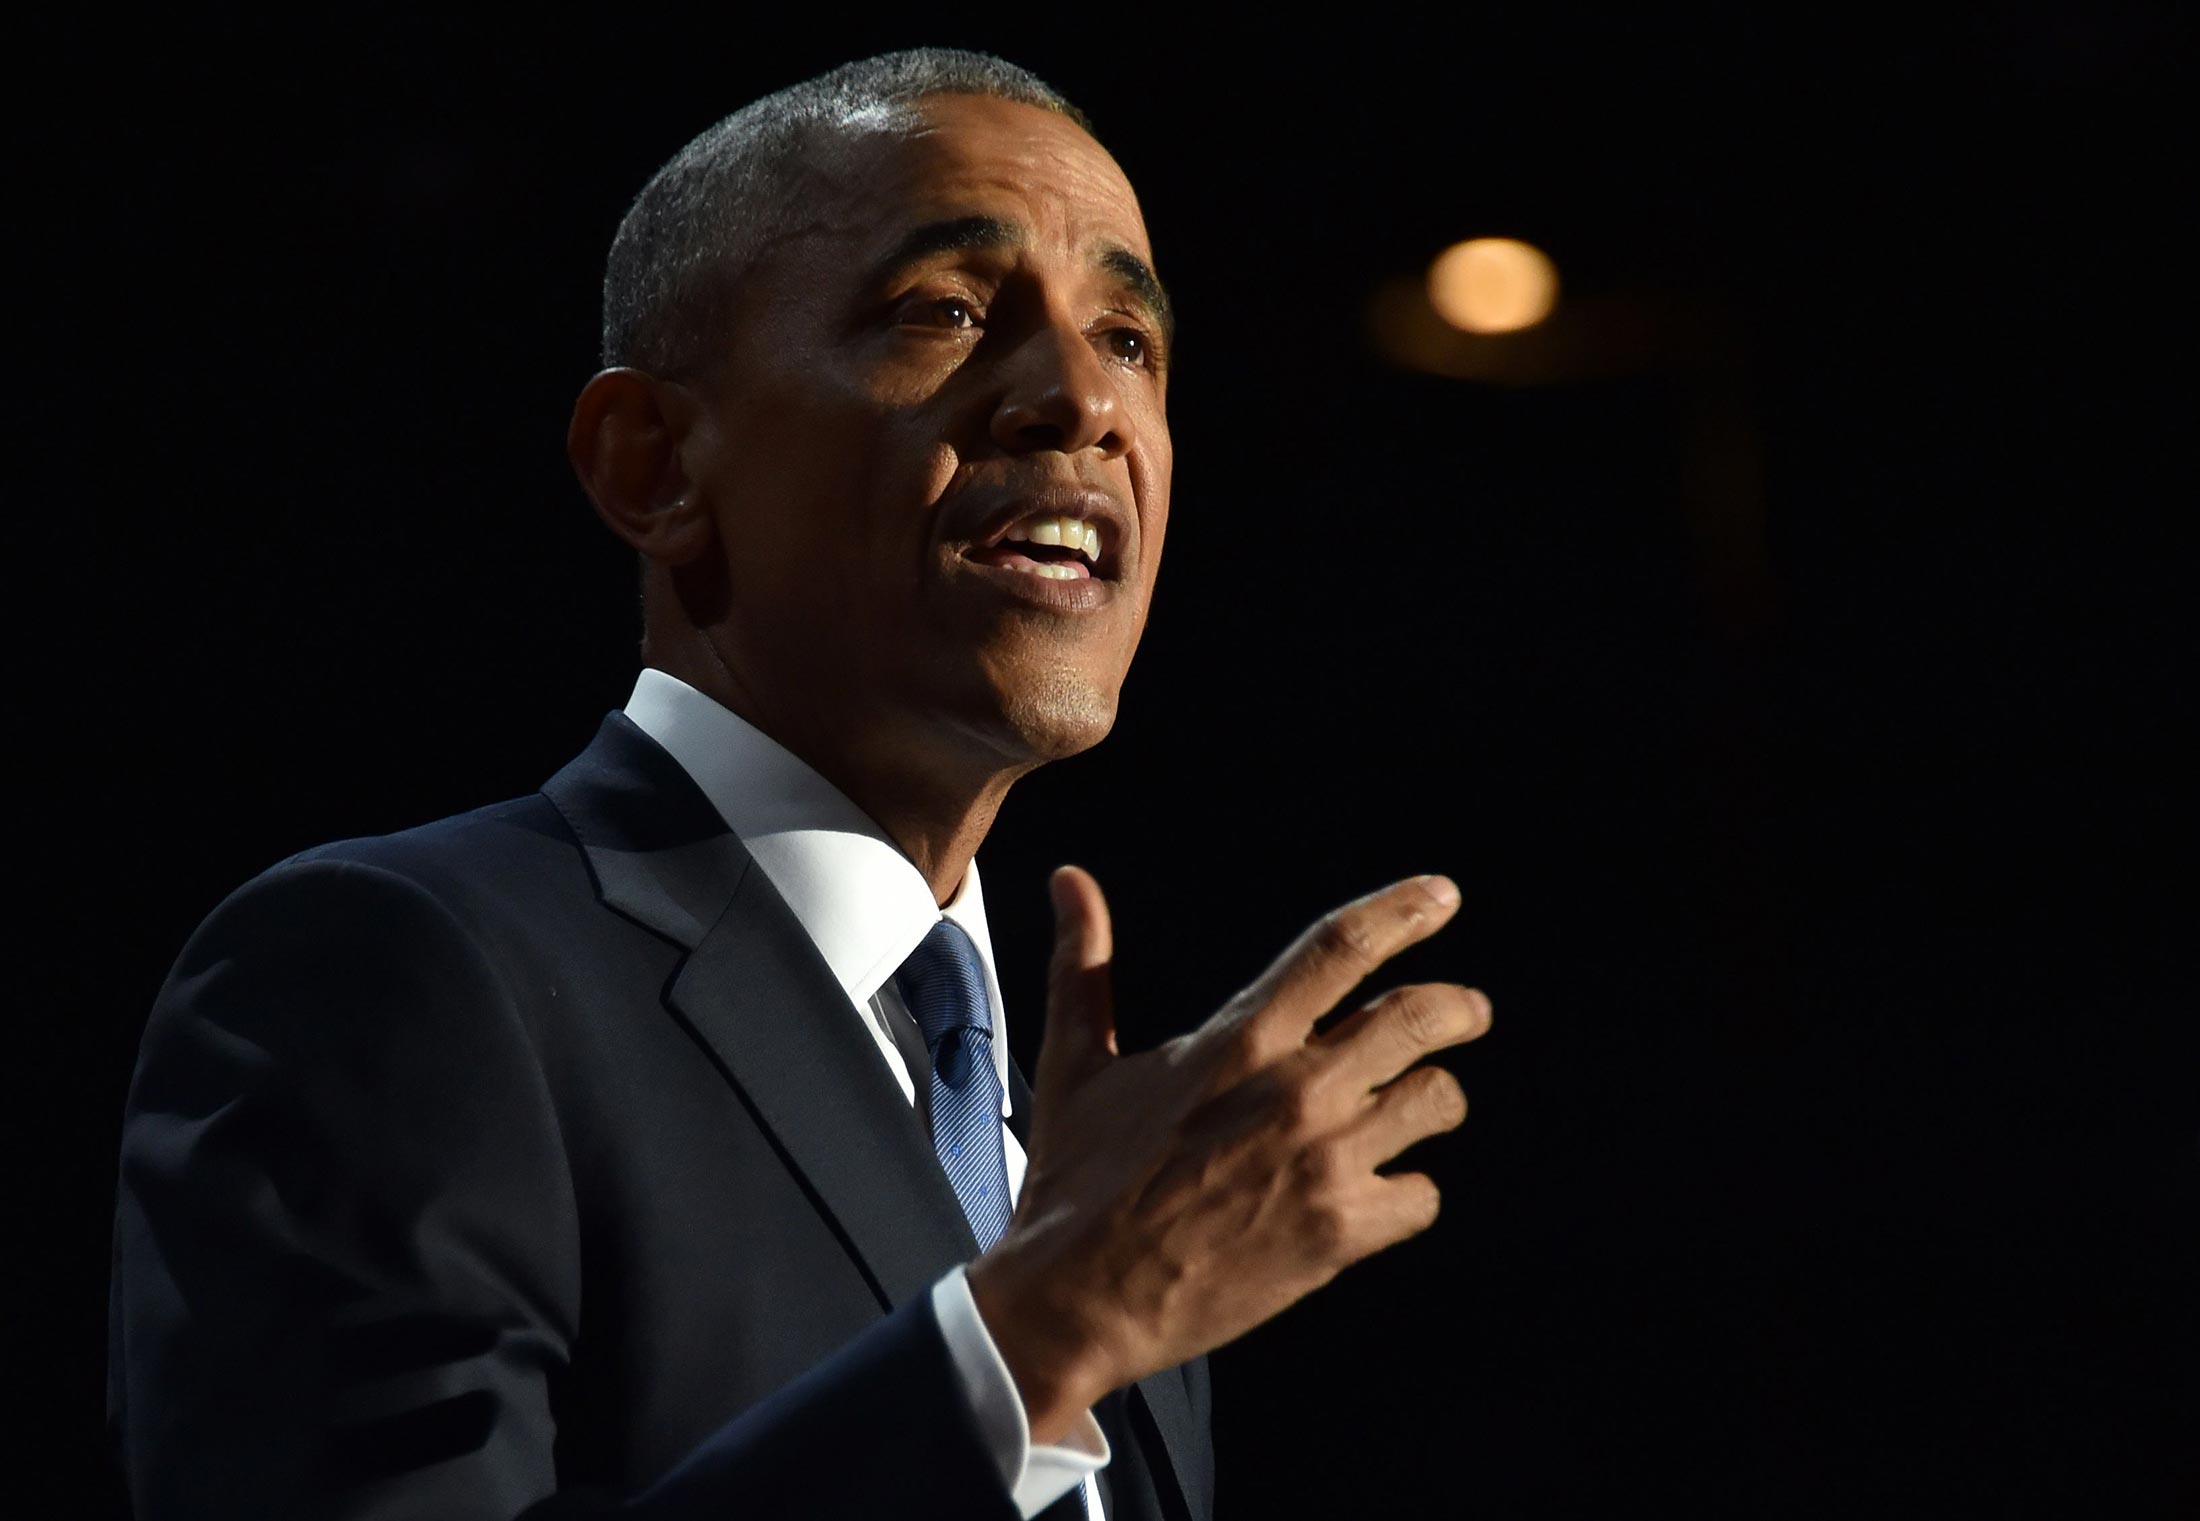 US President Barack Obama speaks during his farewell address in Chicago, Illinois on Jan. 10.
